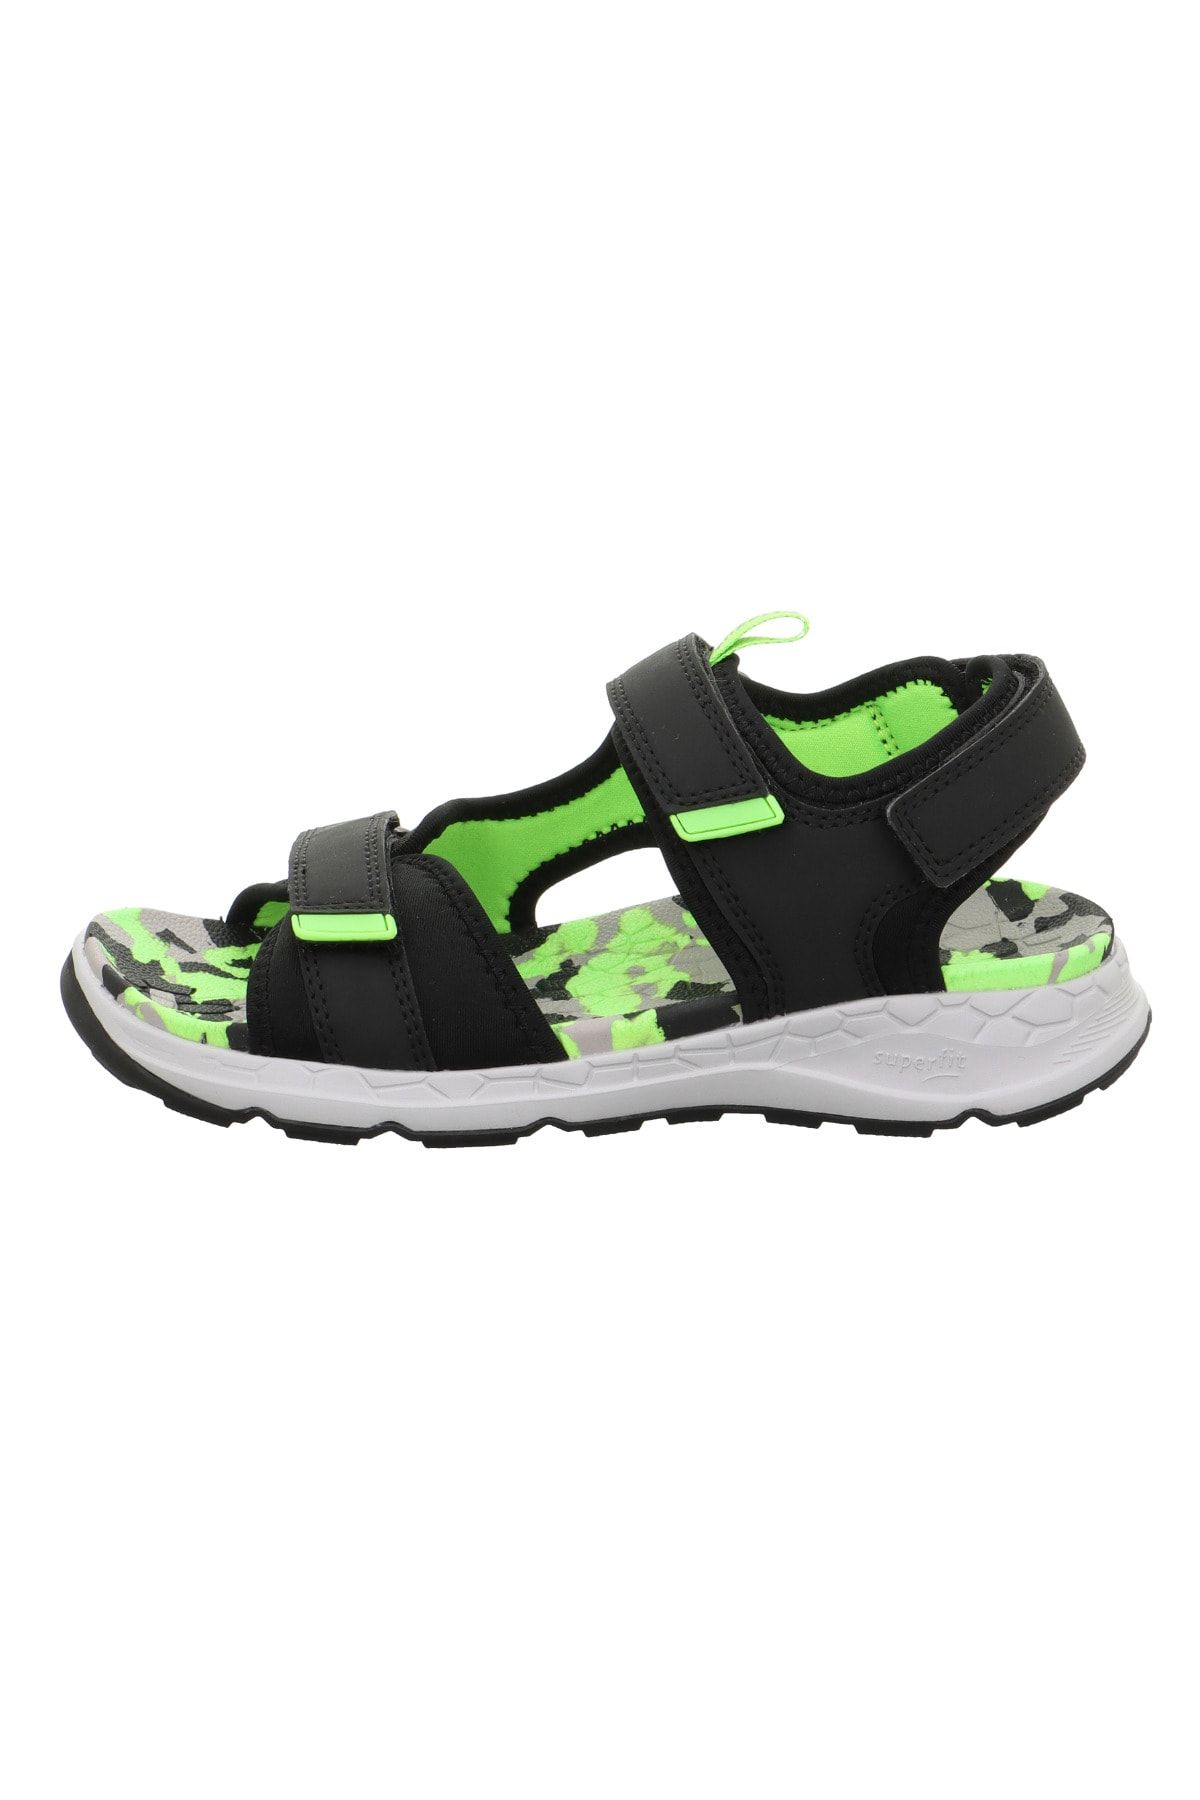 Superfit Criss Cross Çocuk Siyah Yeşil Sandalet